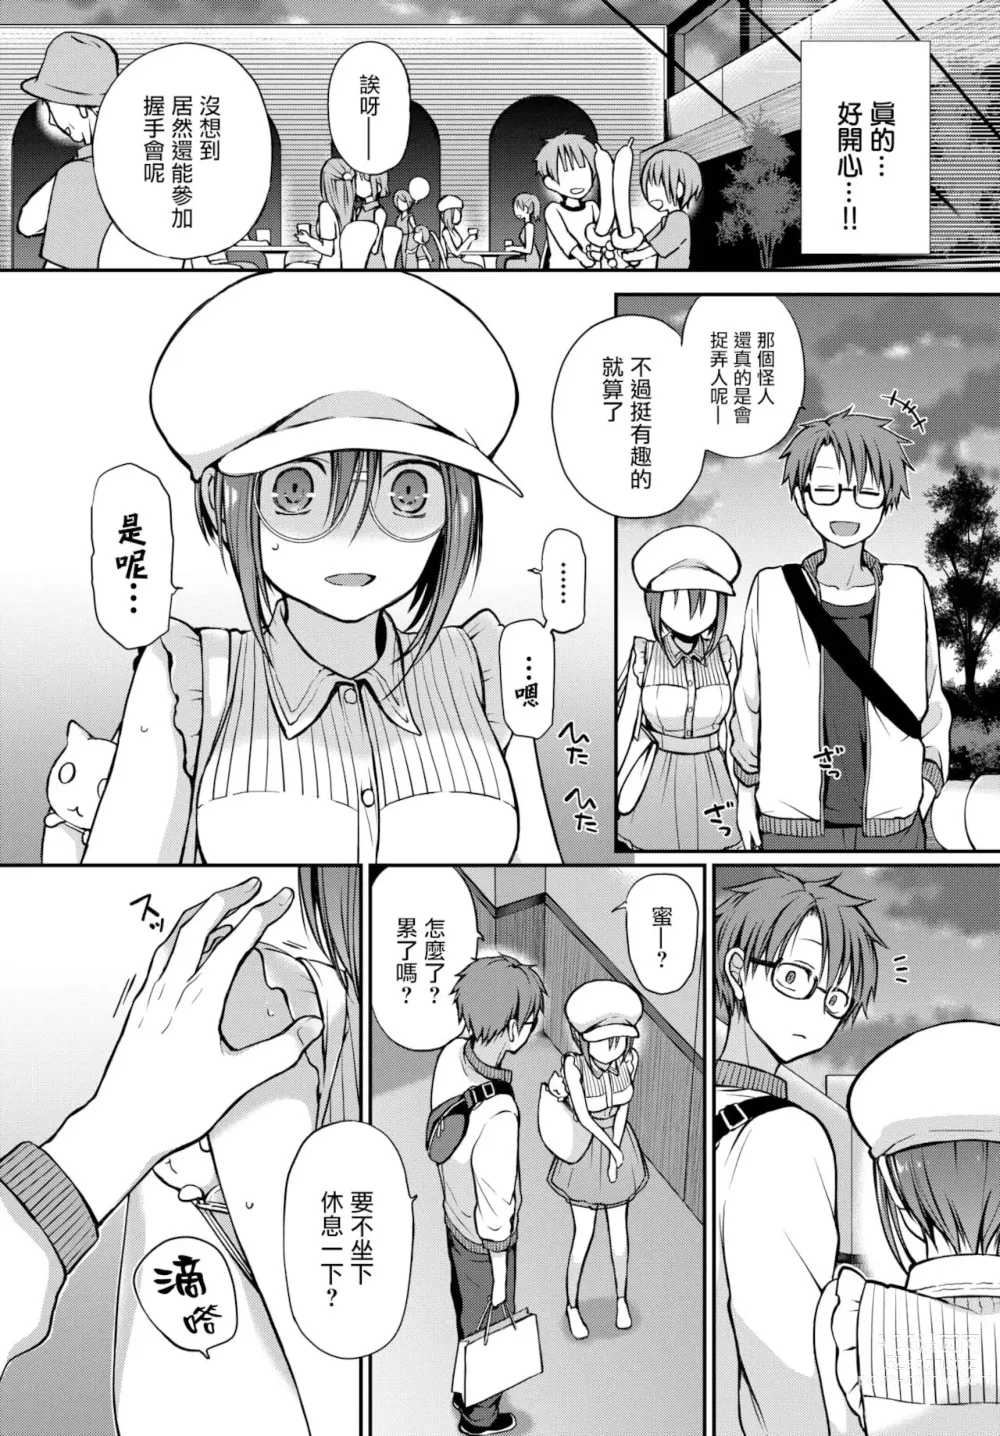 Page 184 of manga Kimi ga, Ii. (uncensored)